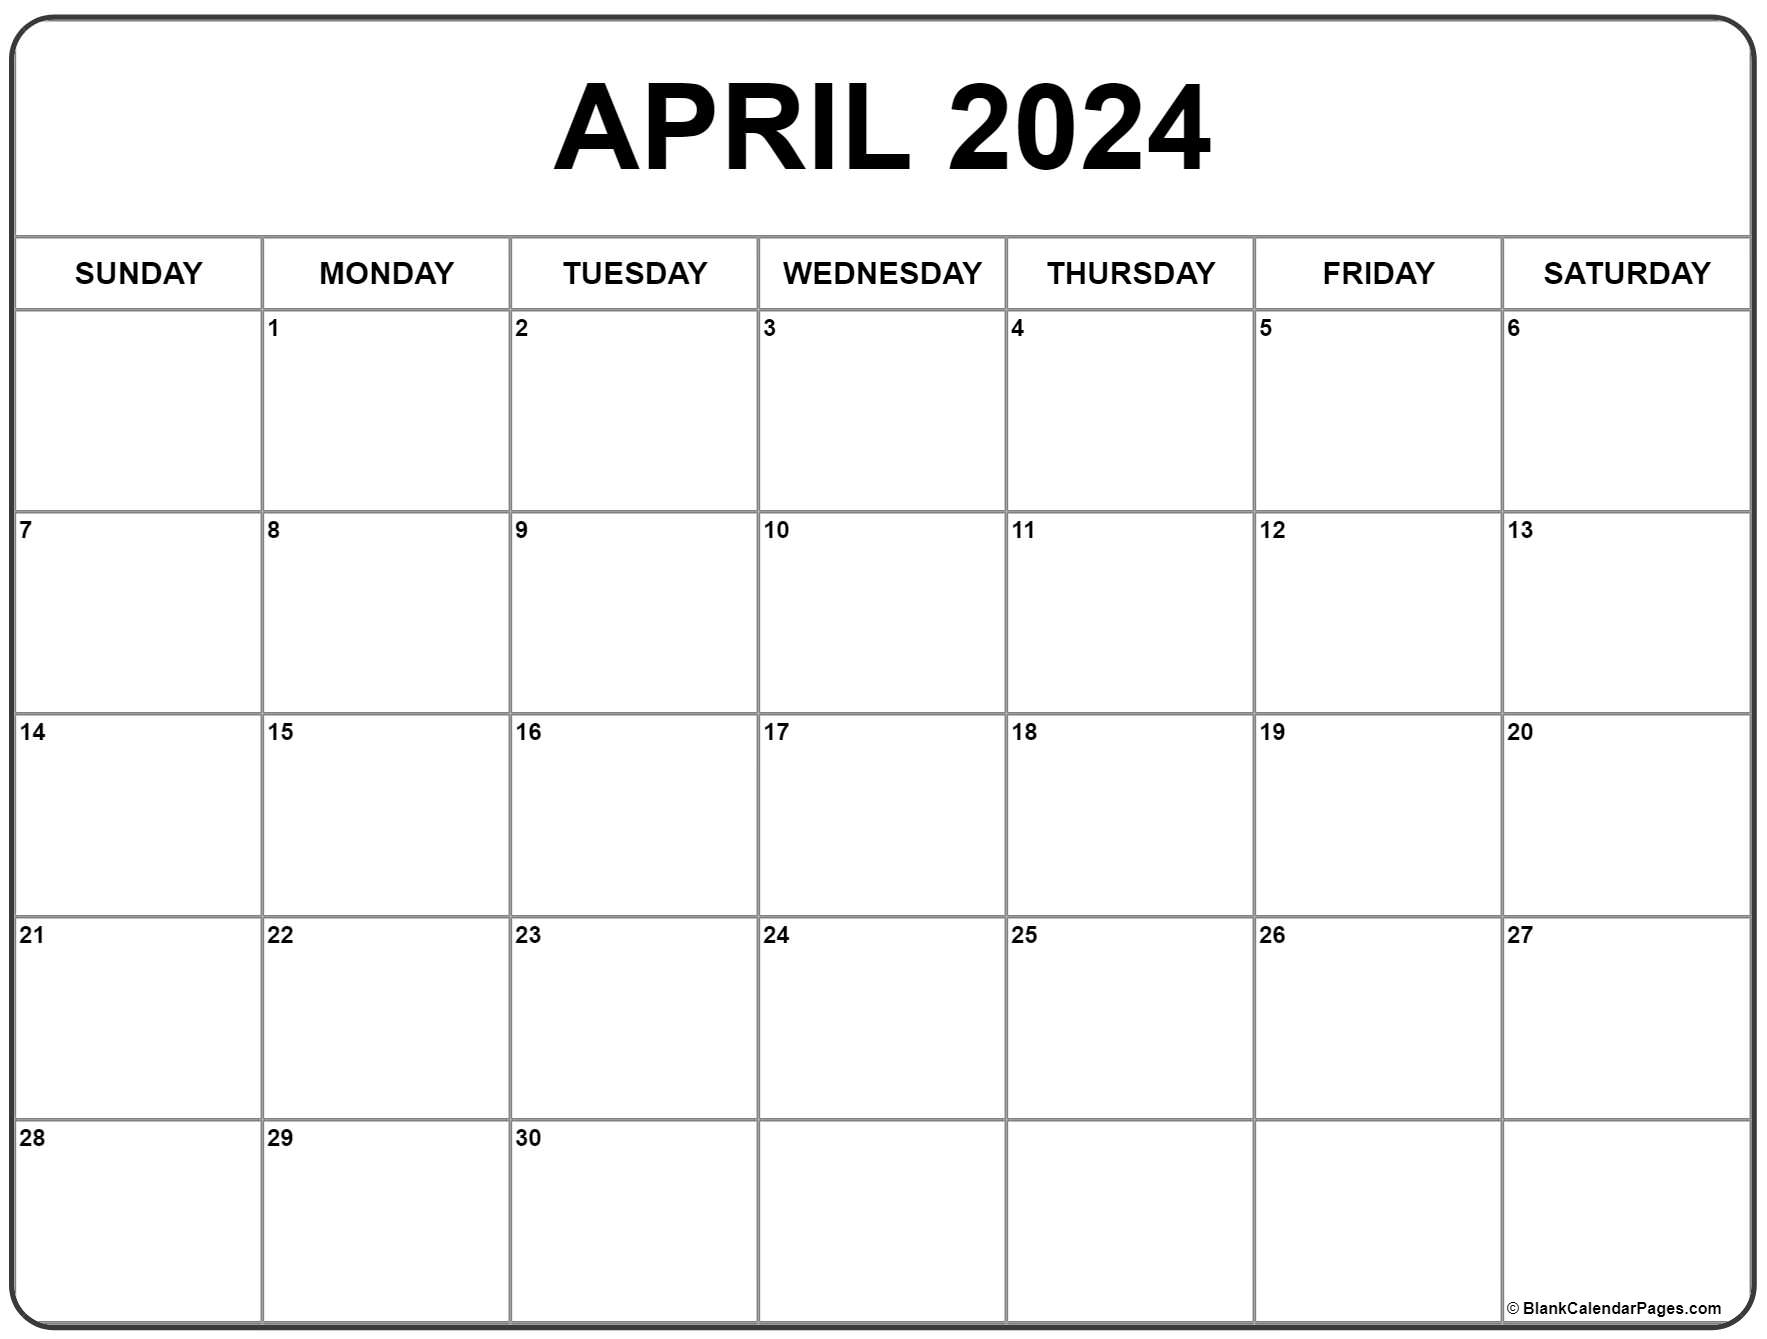 April 2024 Monthly Calendar Printable 99F - Free Printable Calendar April 2024 Calendar